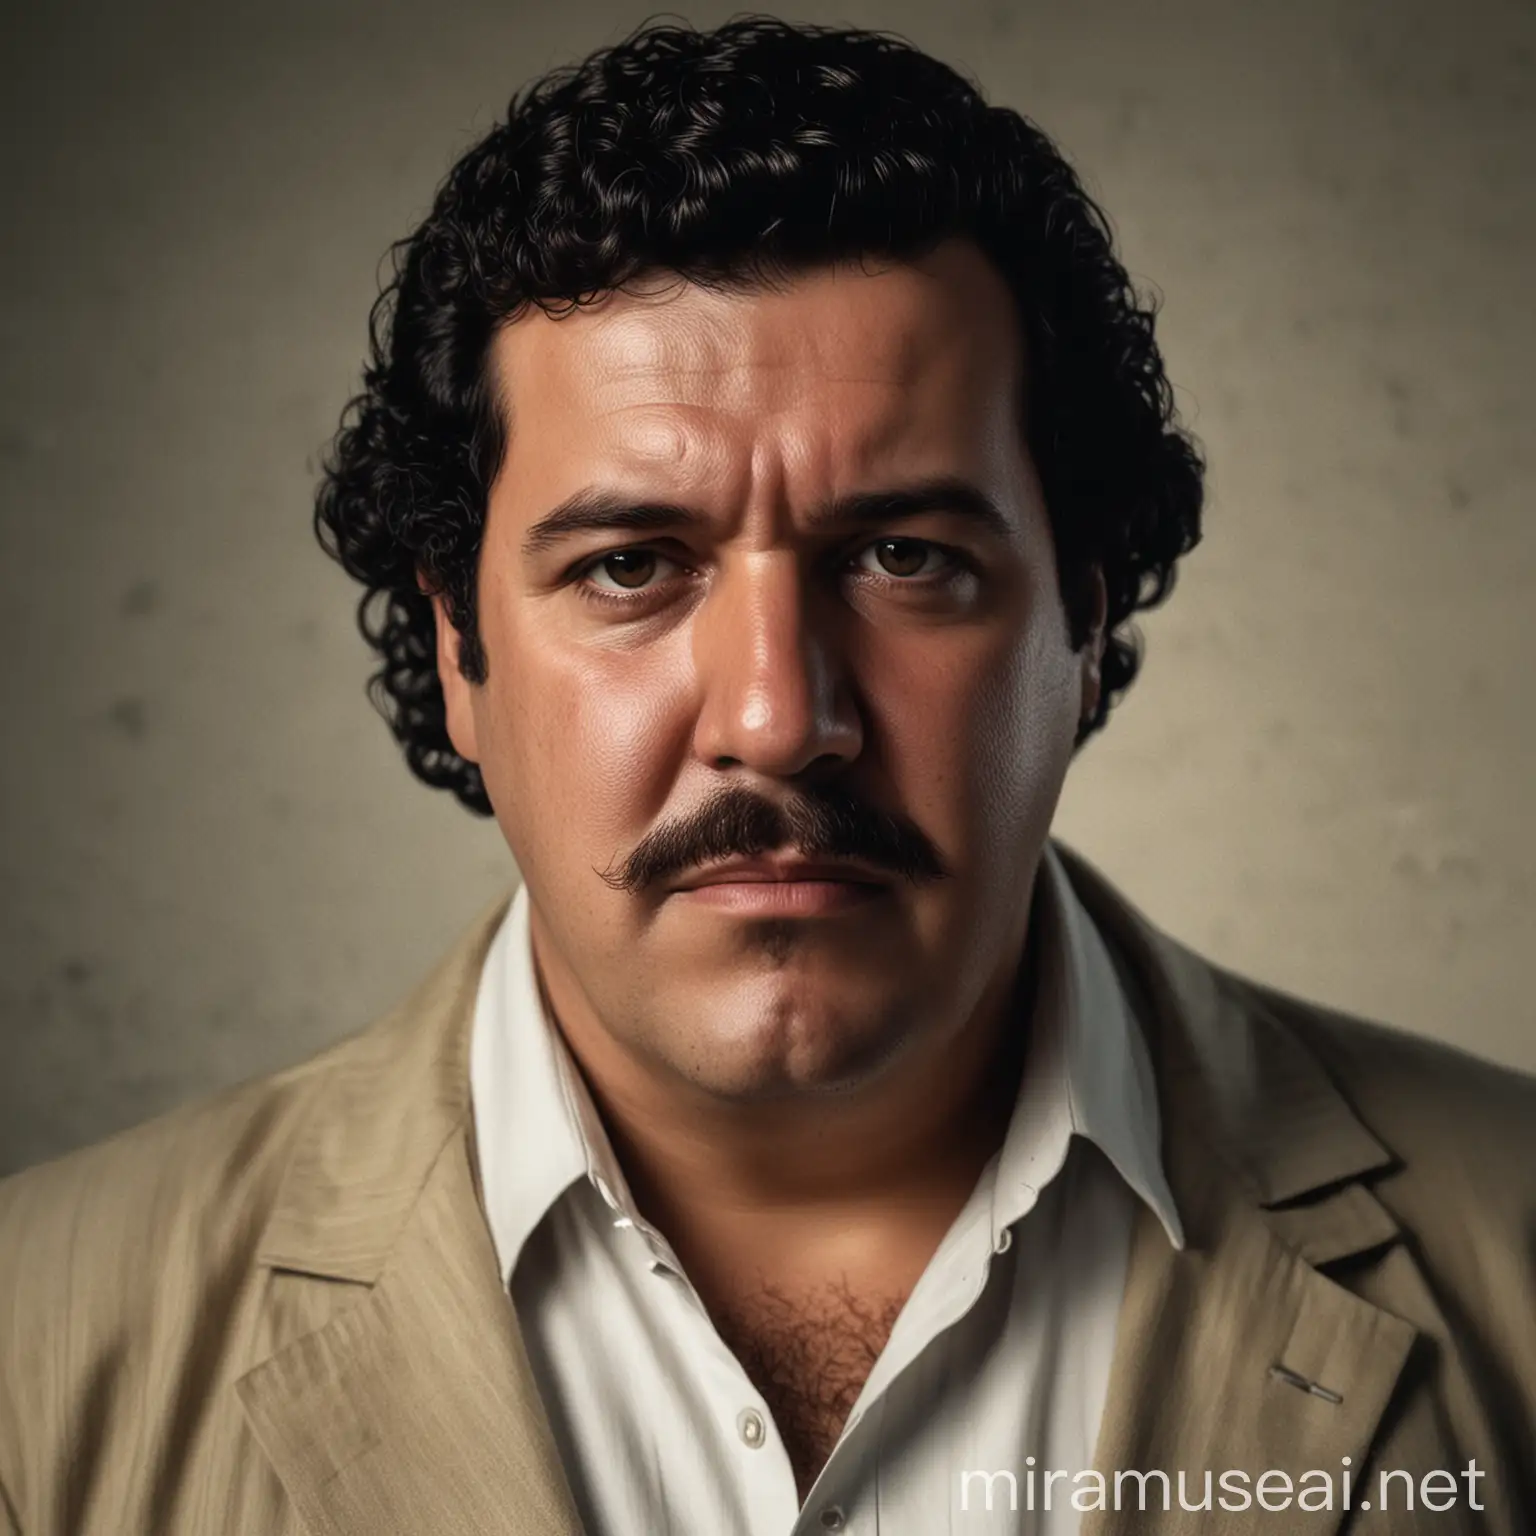 Pablo Escobar Portrait HighResolution Digital Artwork